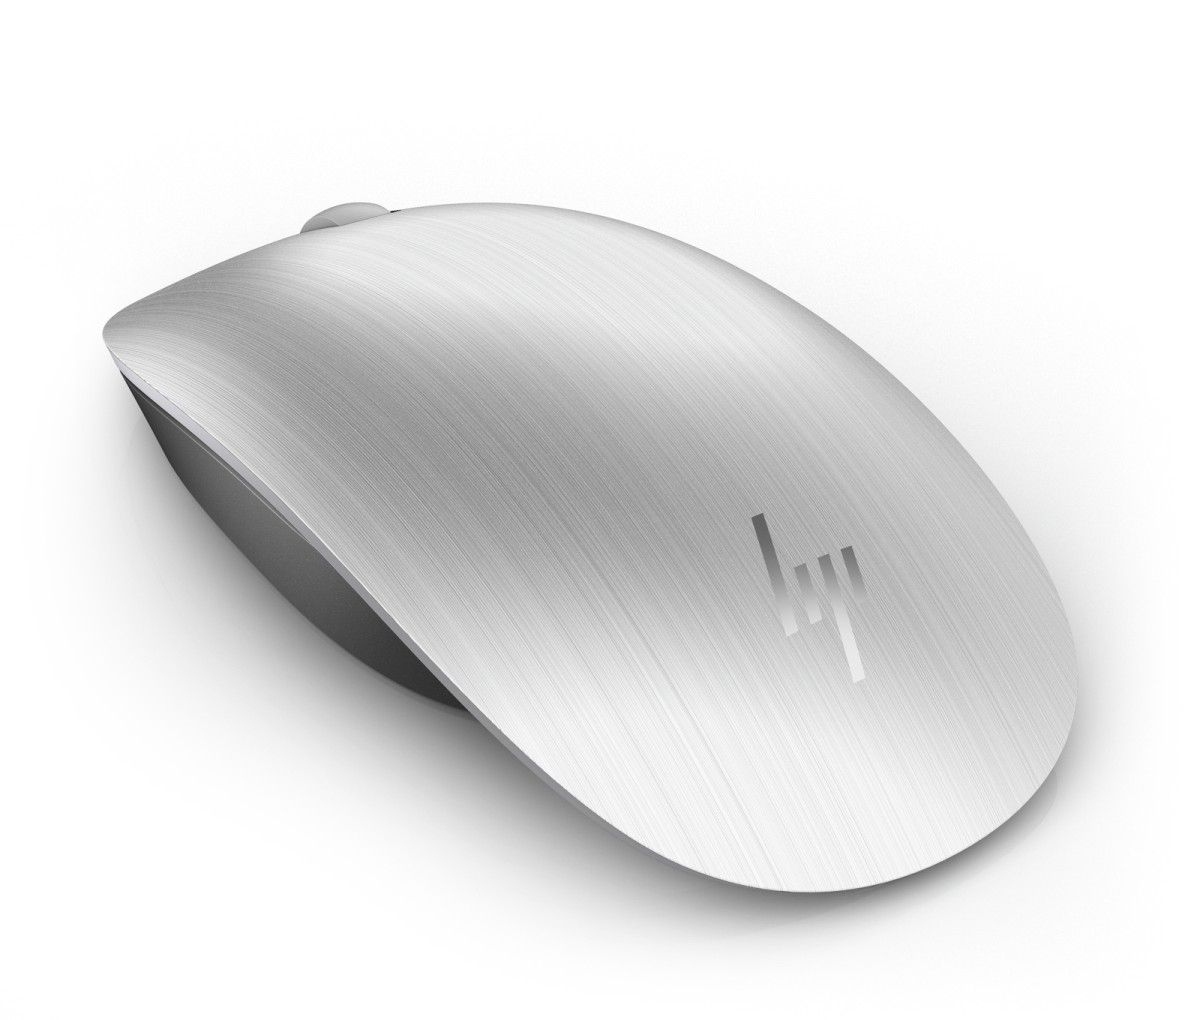 Bluetooth myš HP Spectre 500 - pike silver (1AM58AA)